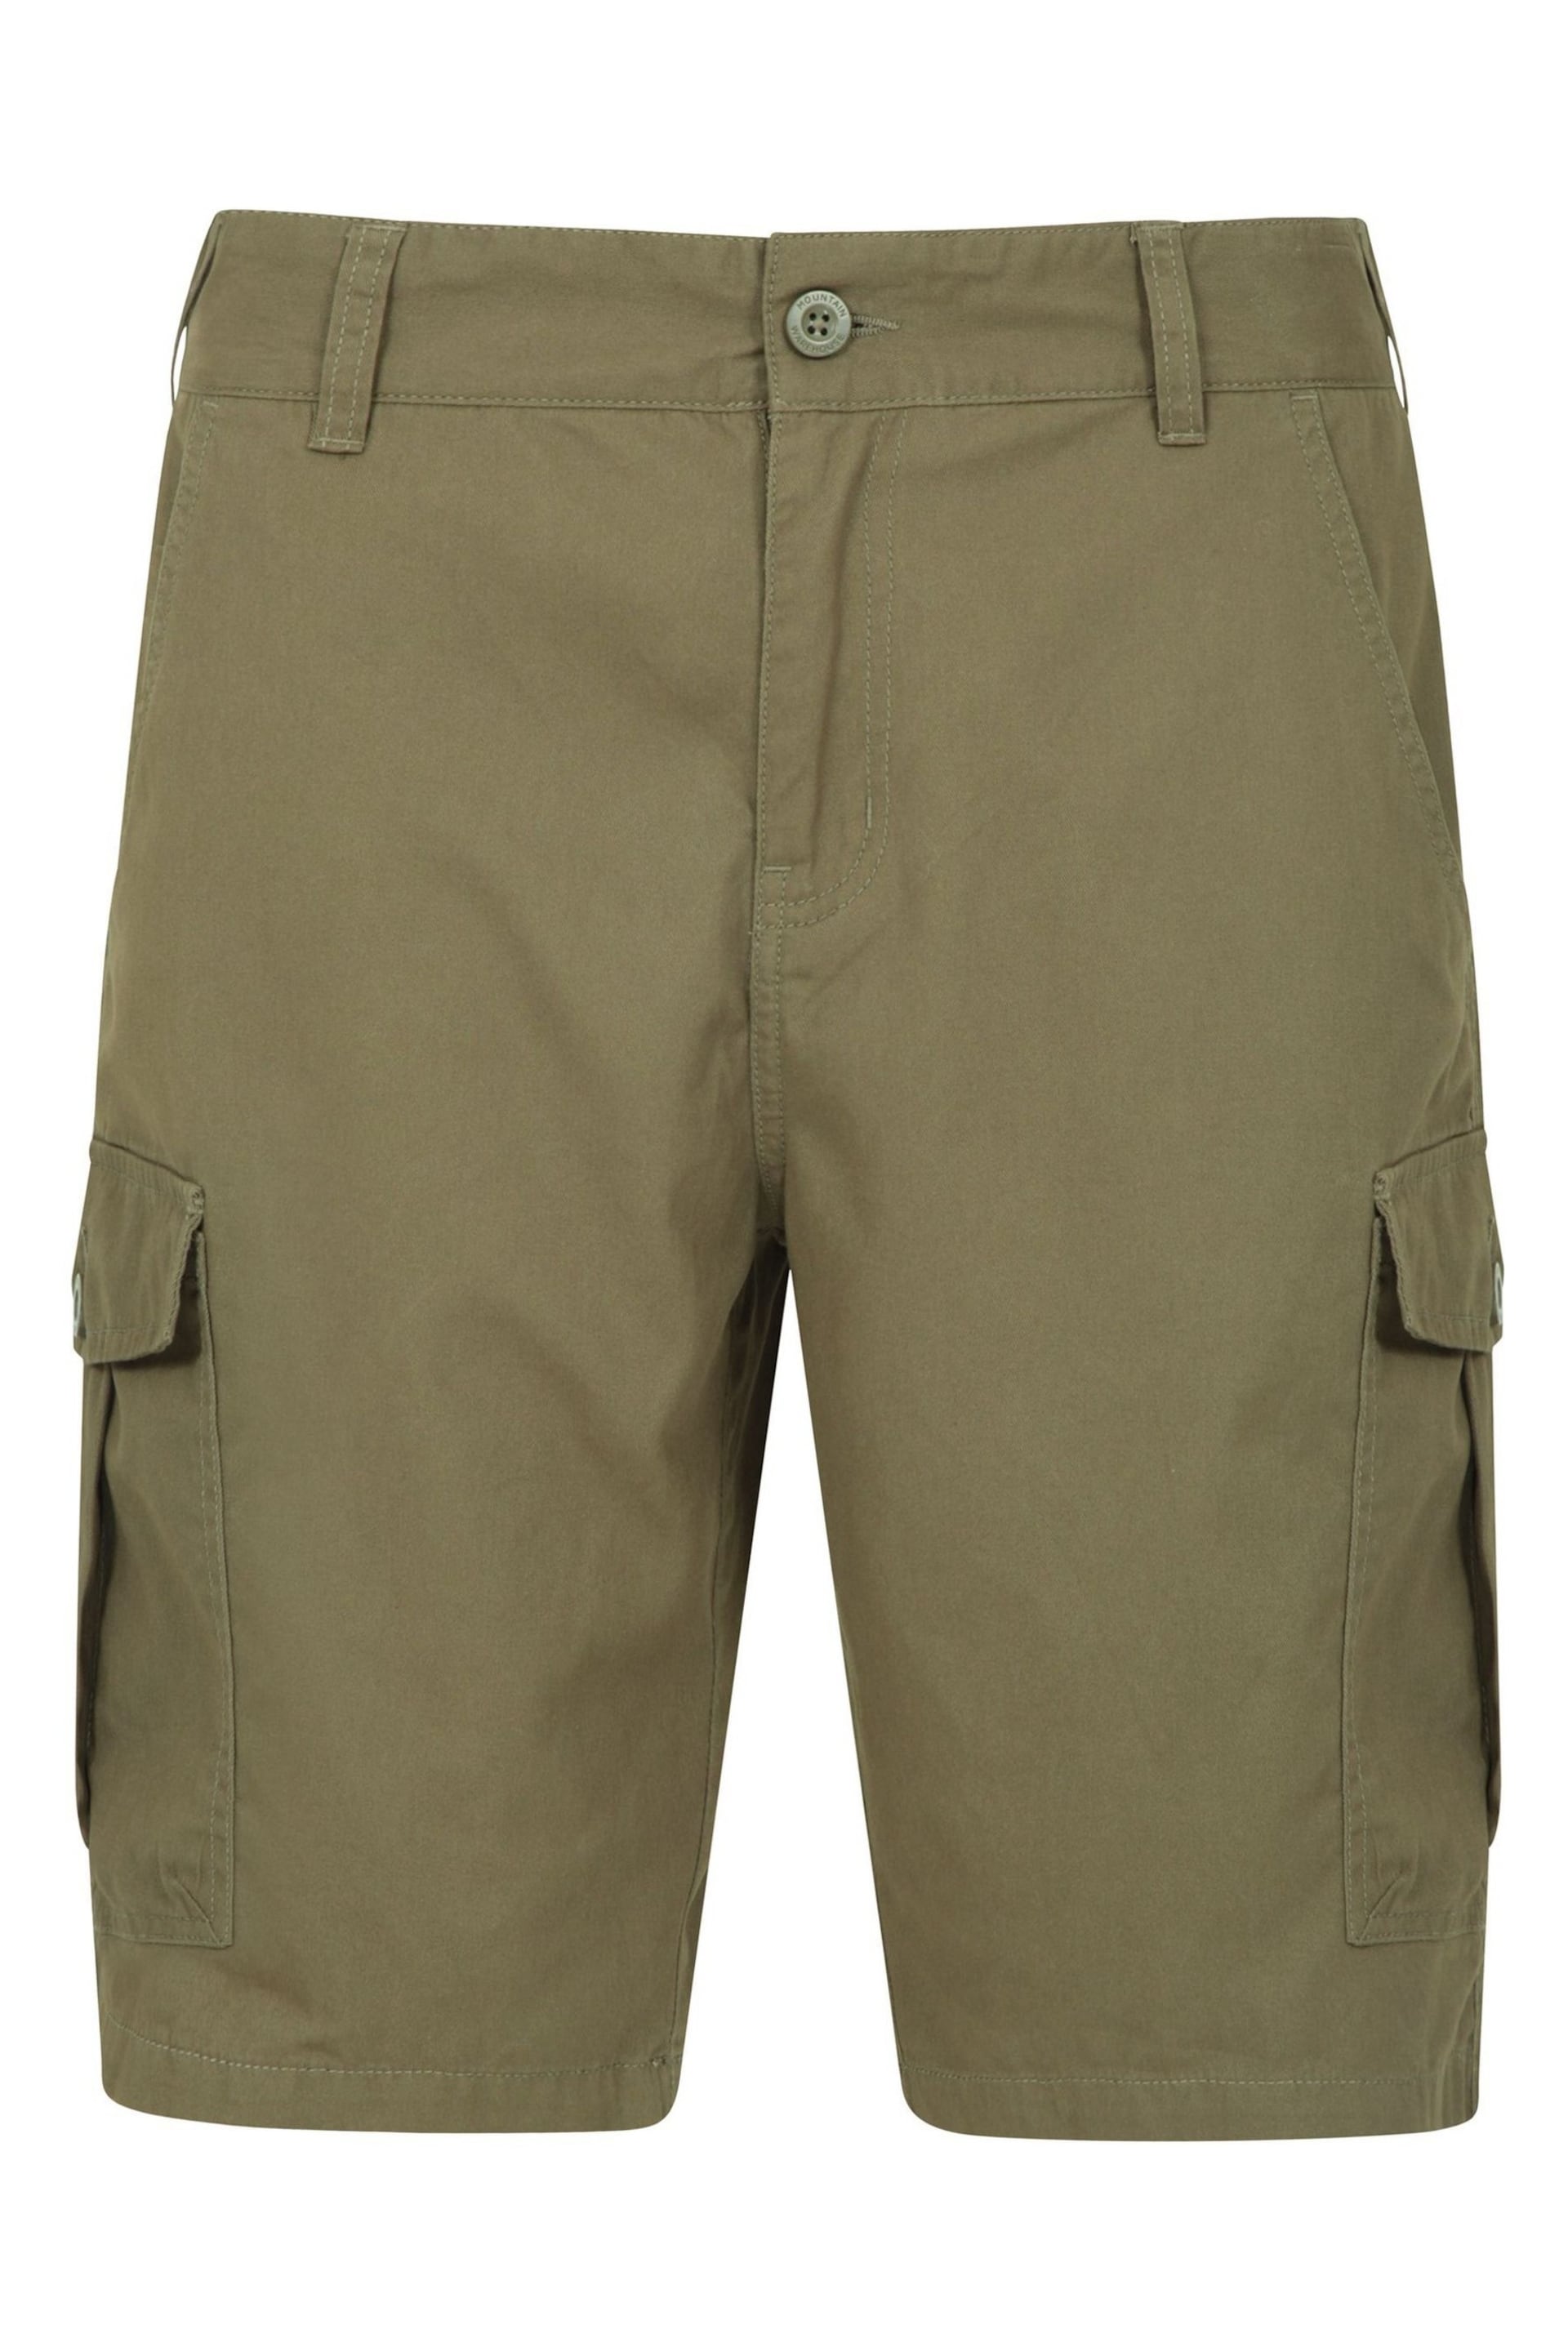 Mountain Warehouse Khaki Green Lakeside Mens Cargo Shorts - Image 1 of 5